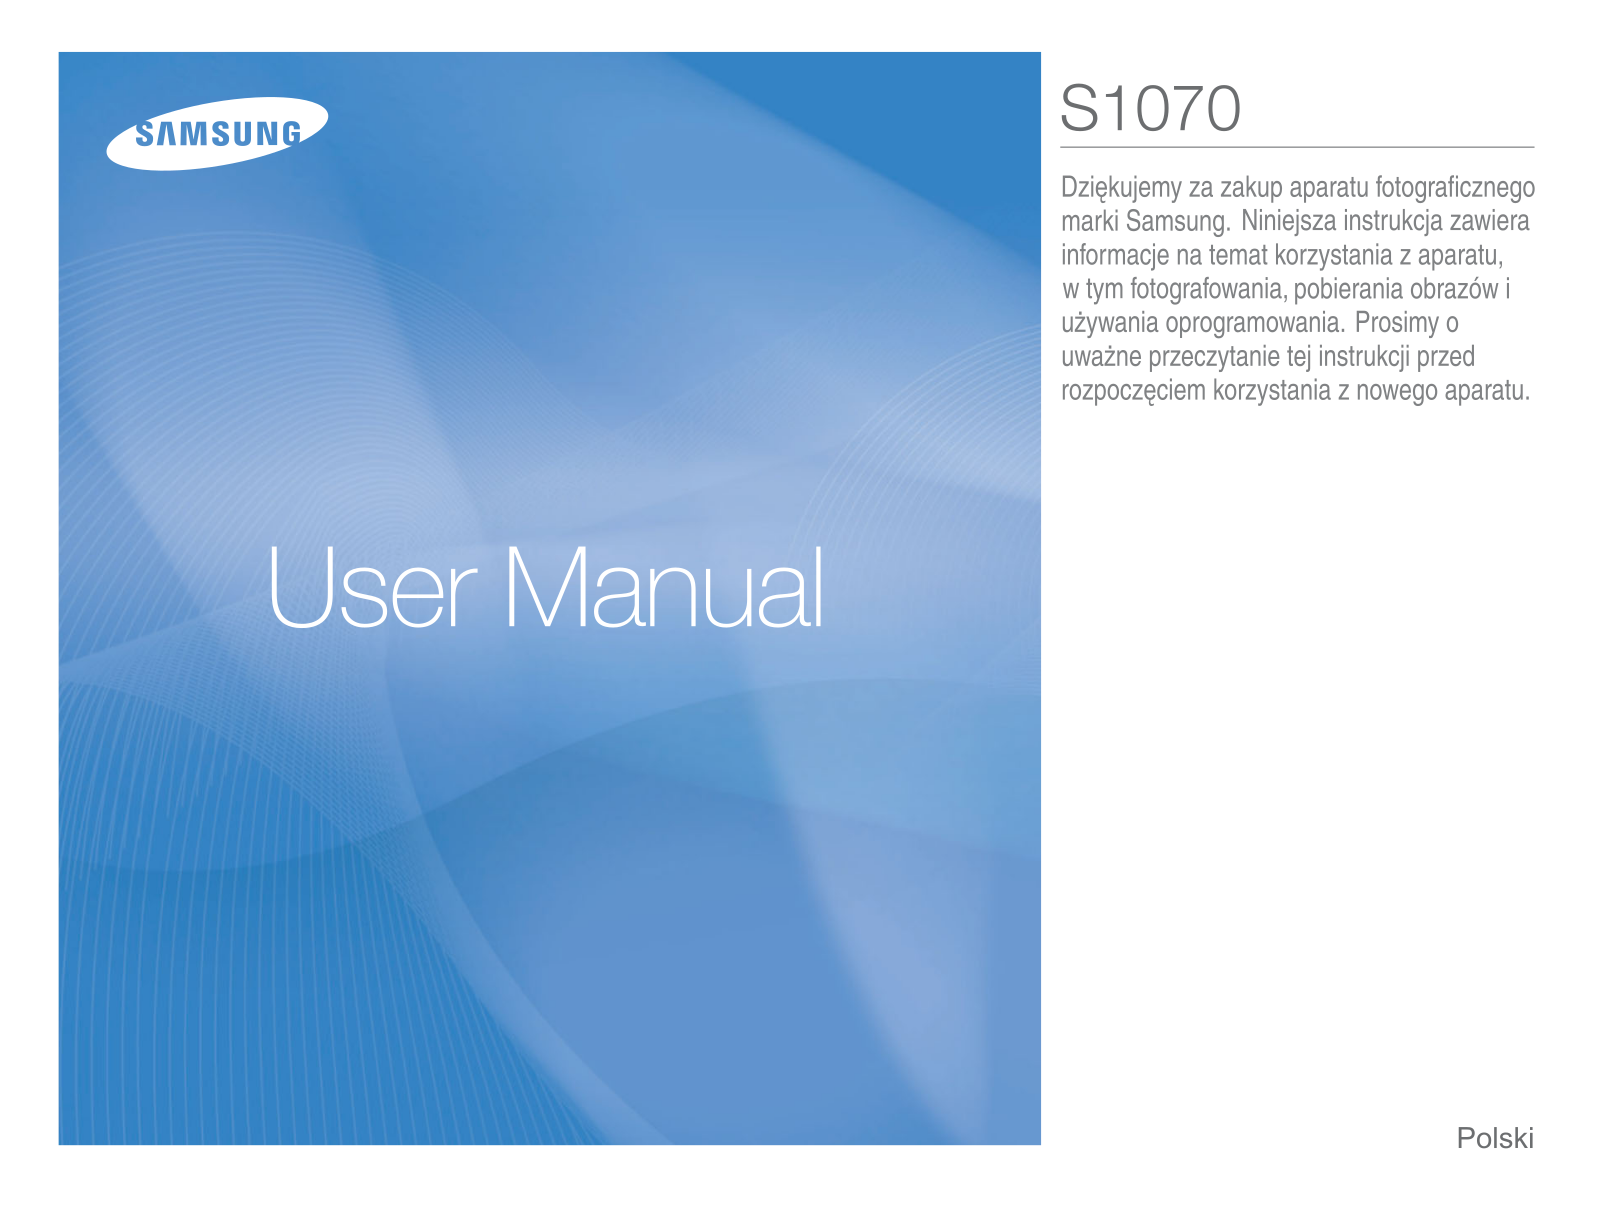 Samsung S1070 User Manual